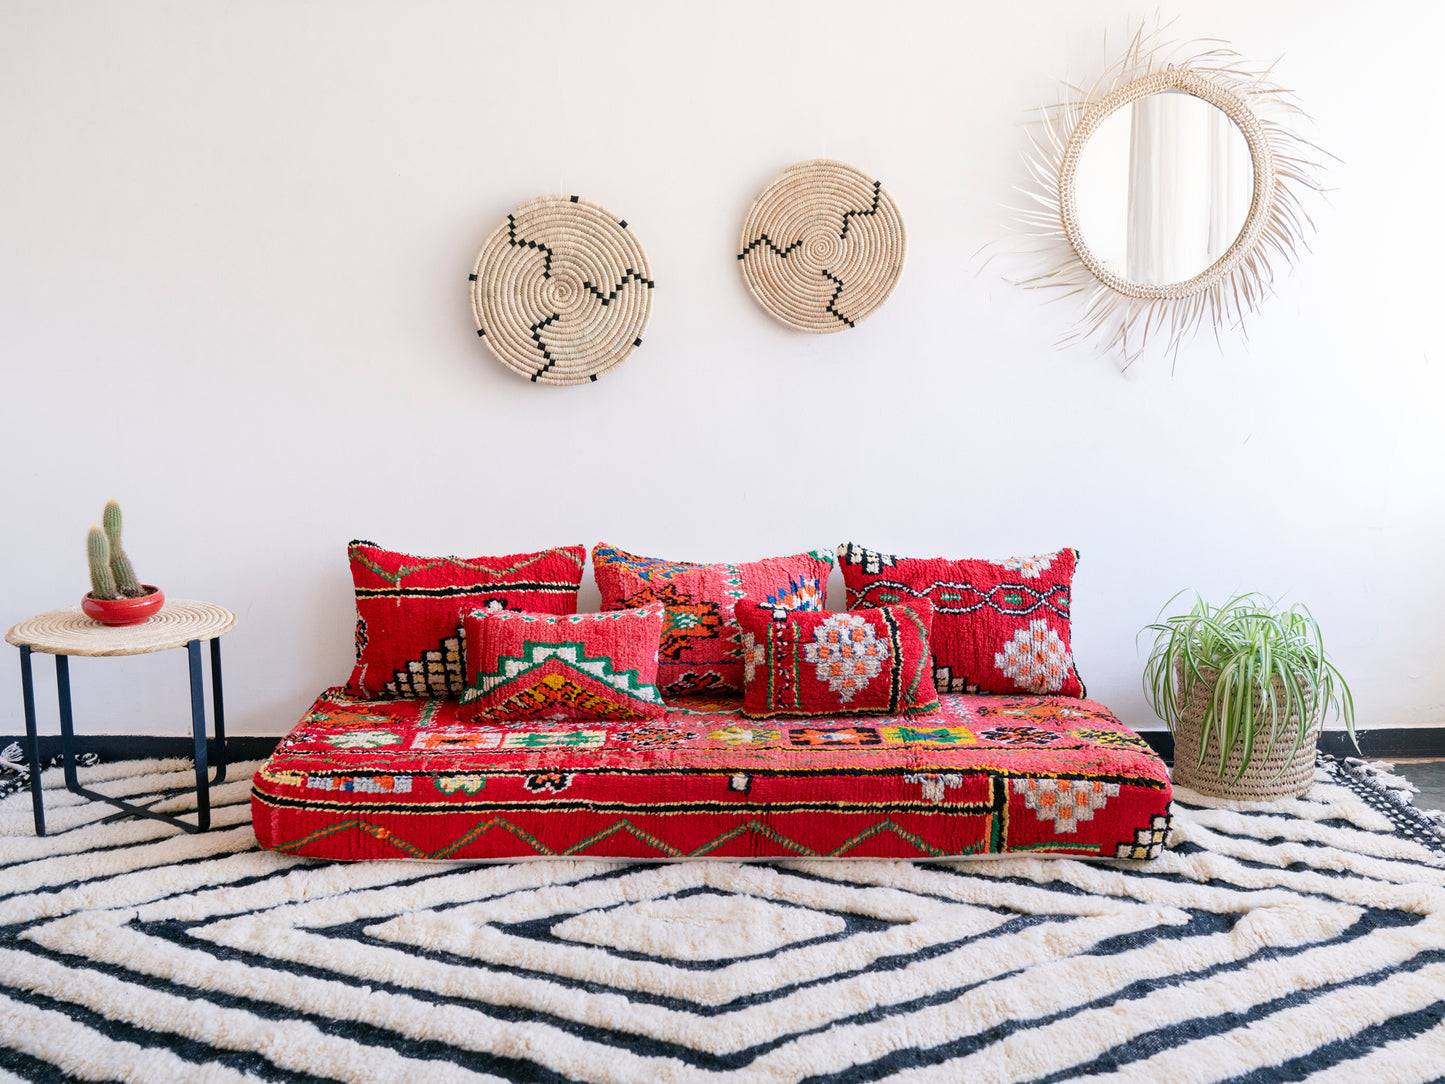 6ft Handmade Amazigh Vintage Sofa Azur ⵜⵓⴷⴻⵔⵜ. FREE SHIPPING